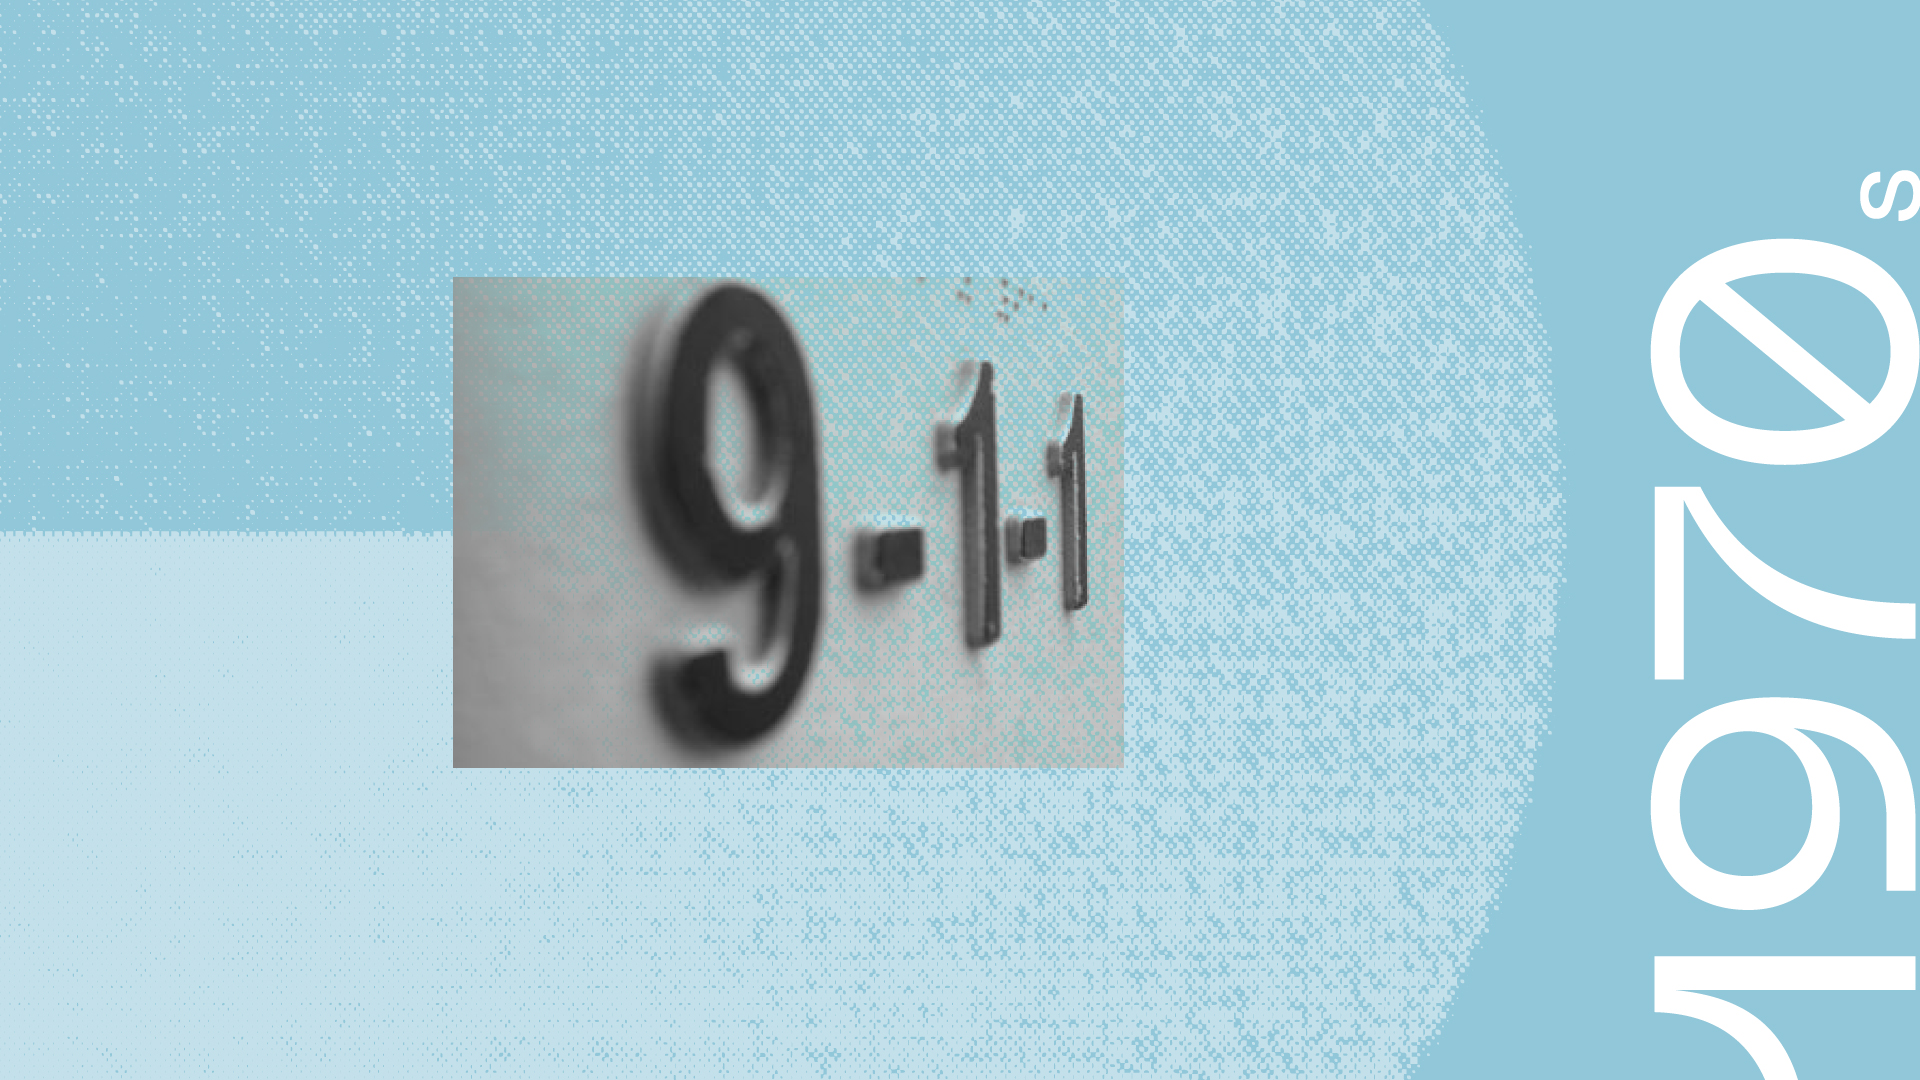 911 emergency call system